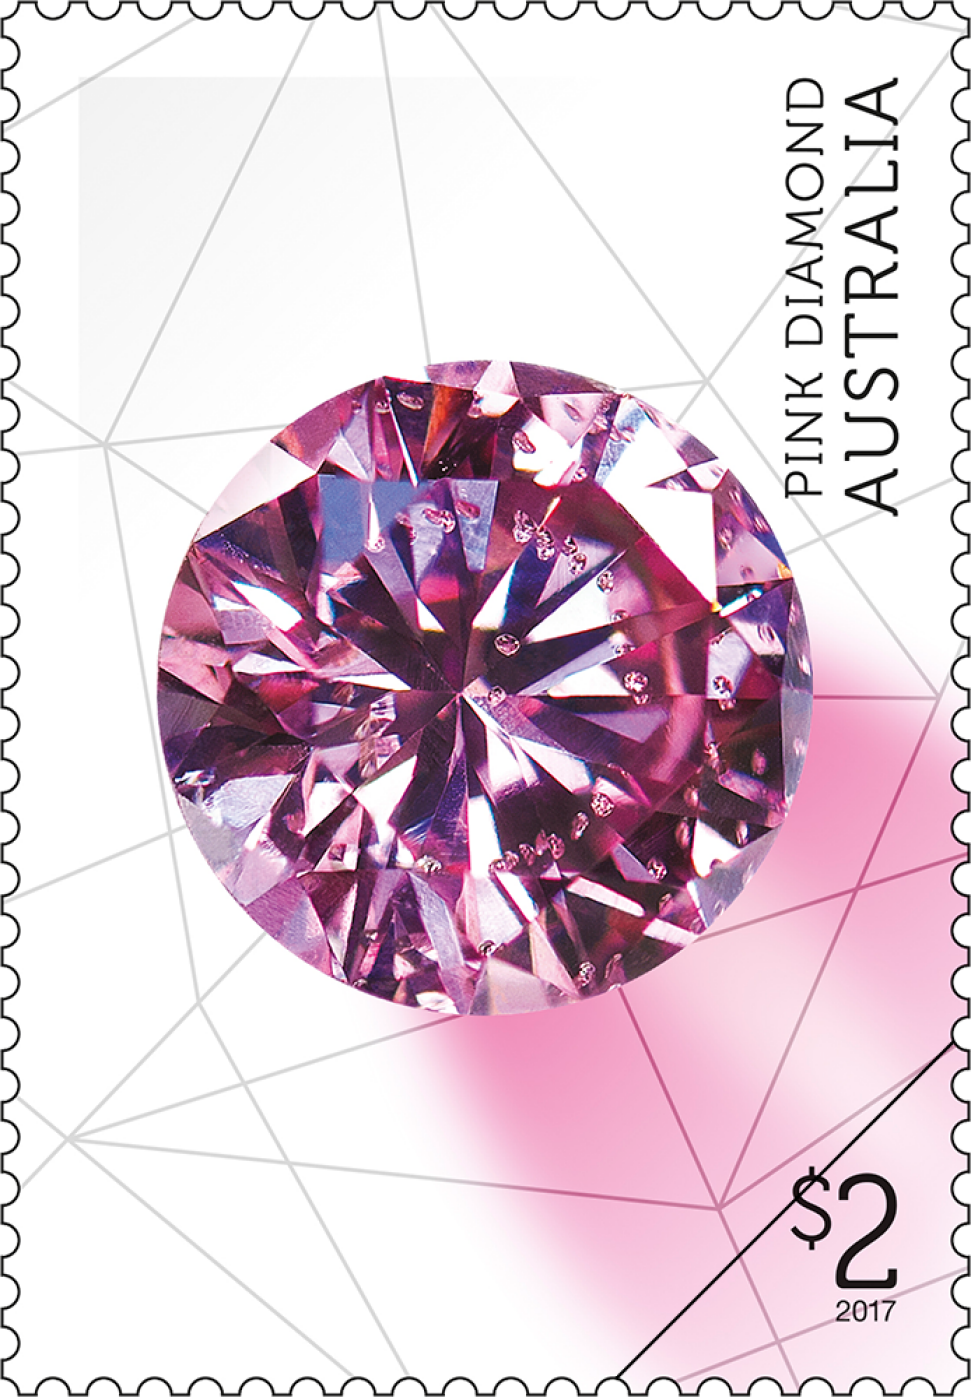 $2 Pink diamond